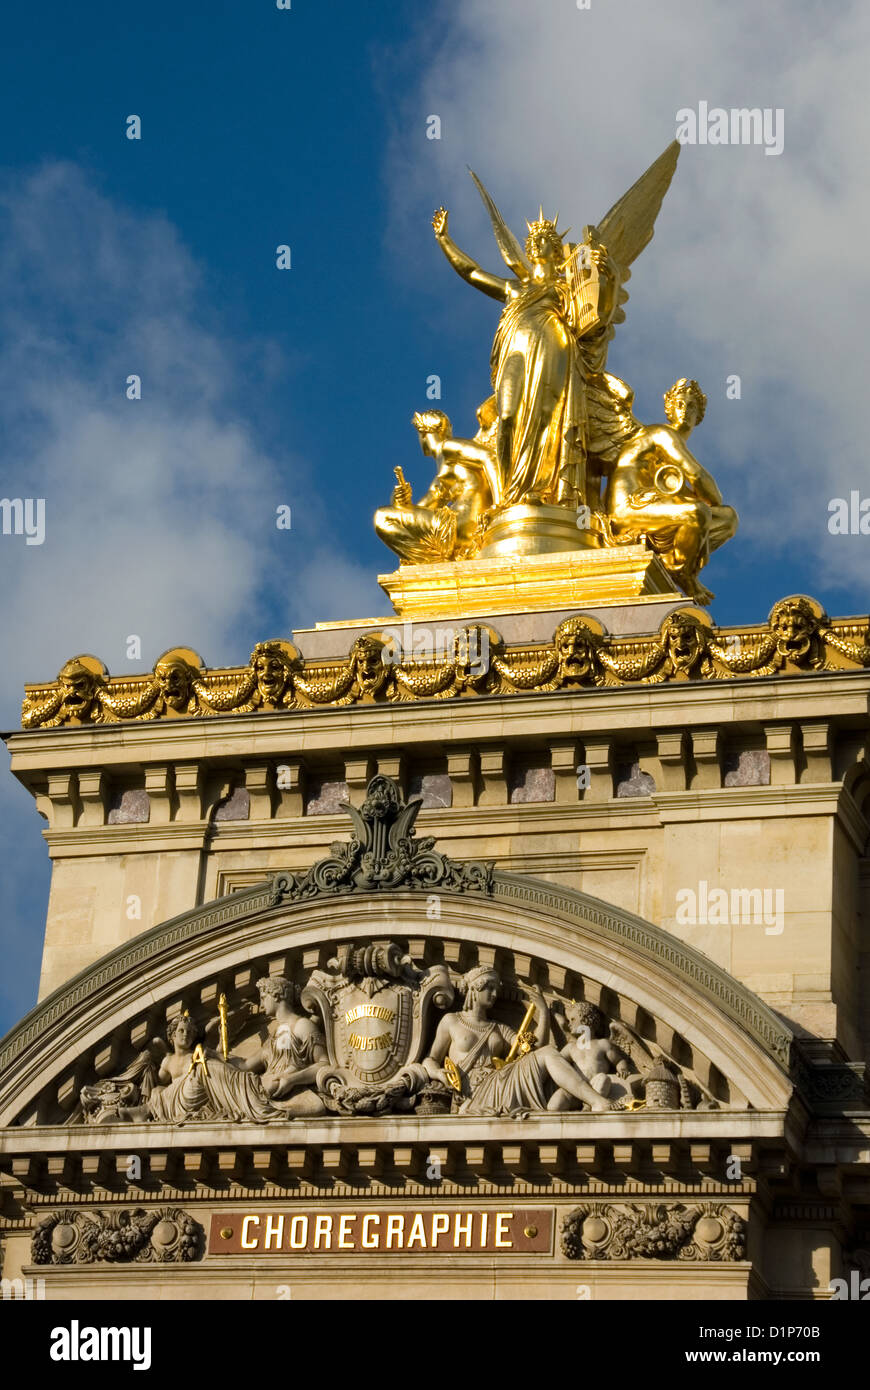 The statue L'Harmonie, Paris Opera House, France Stock Photo